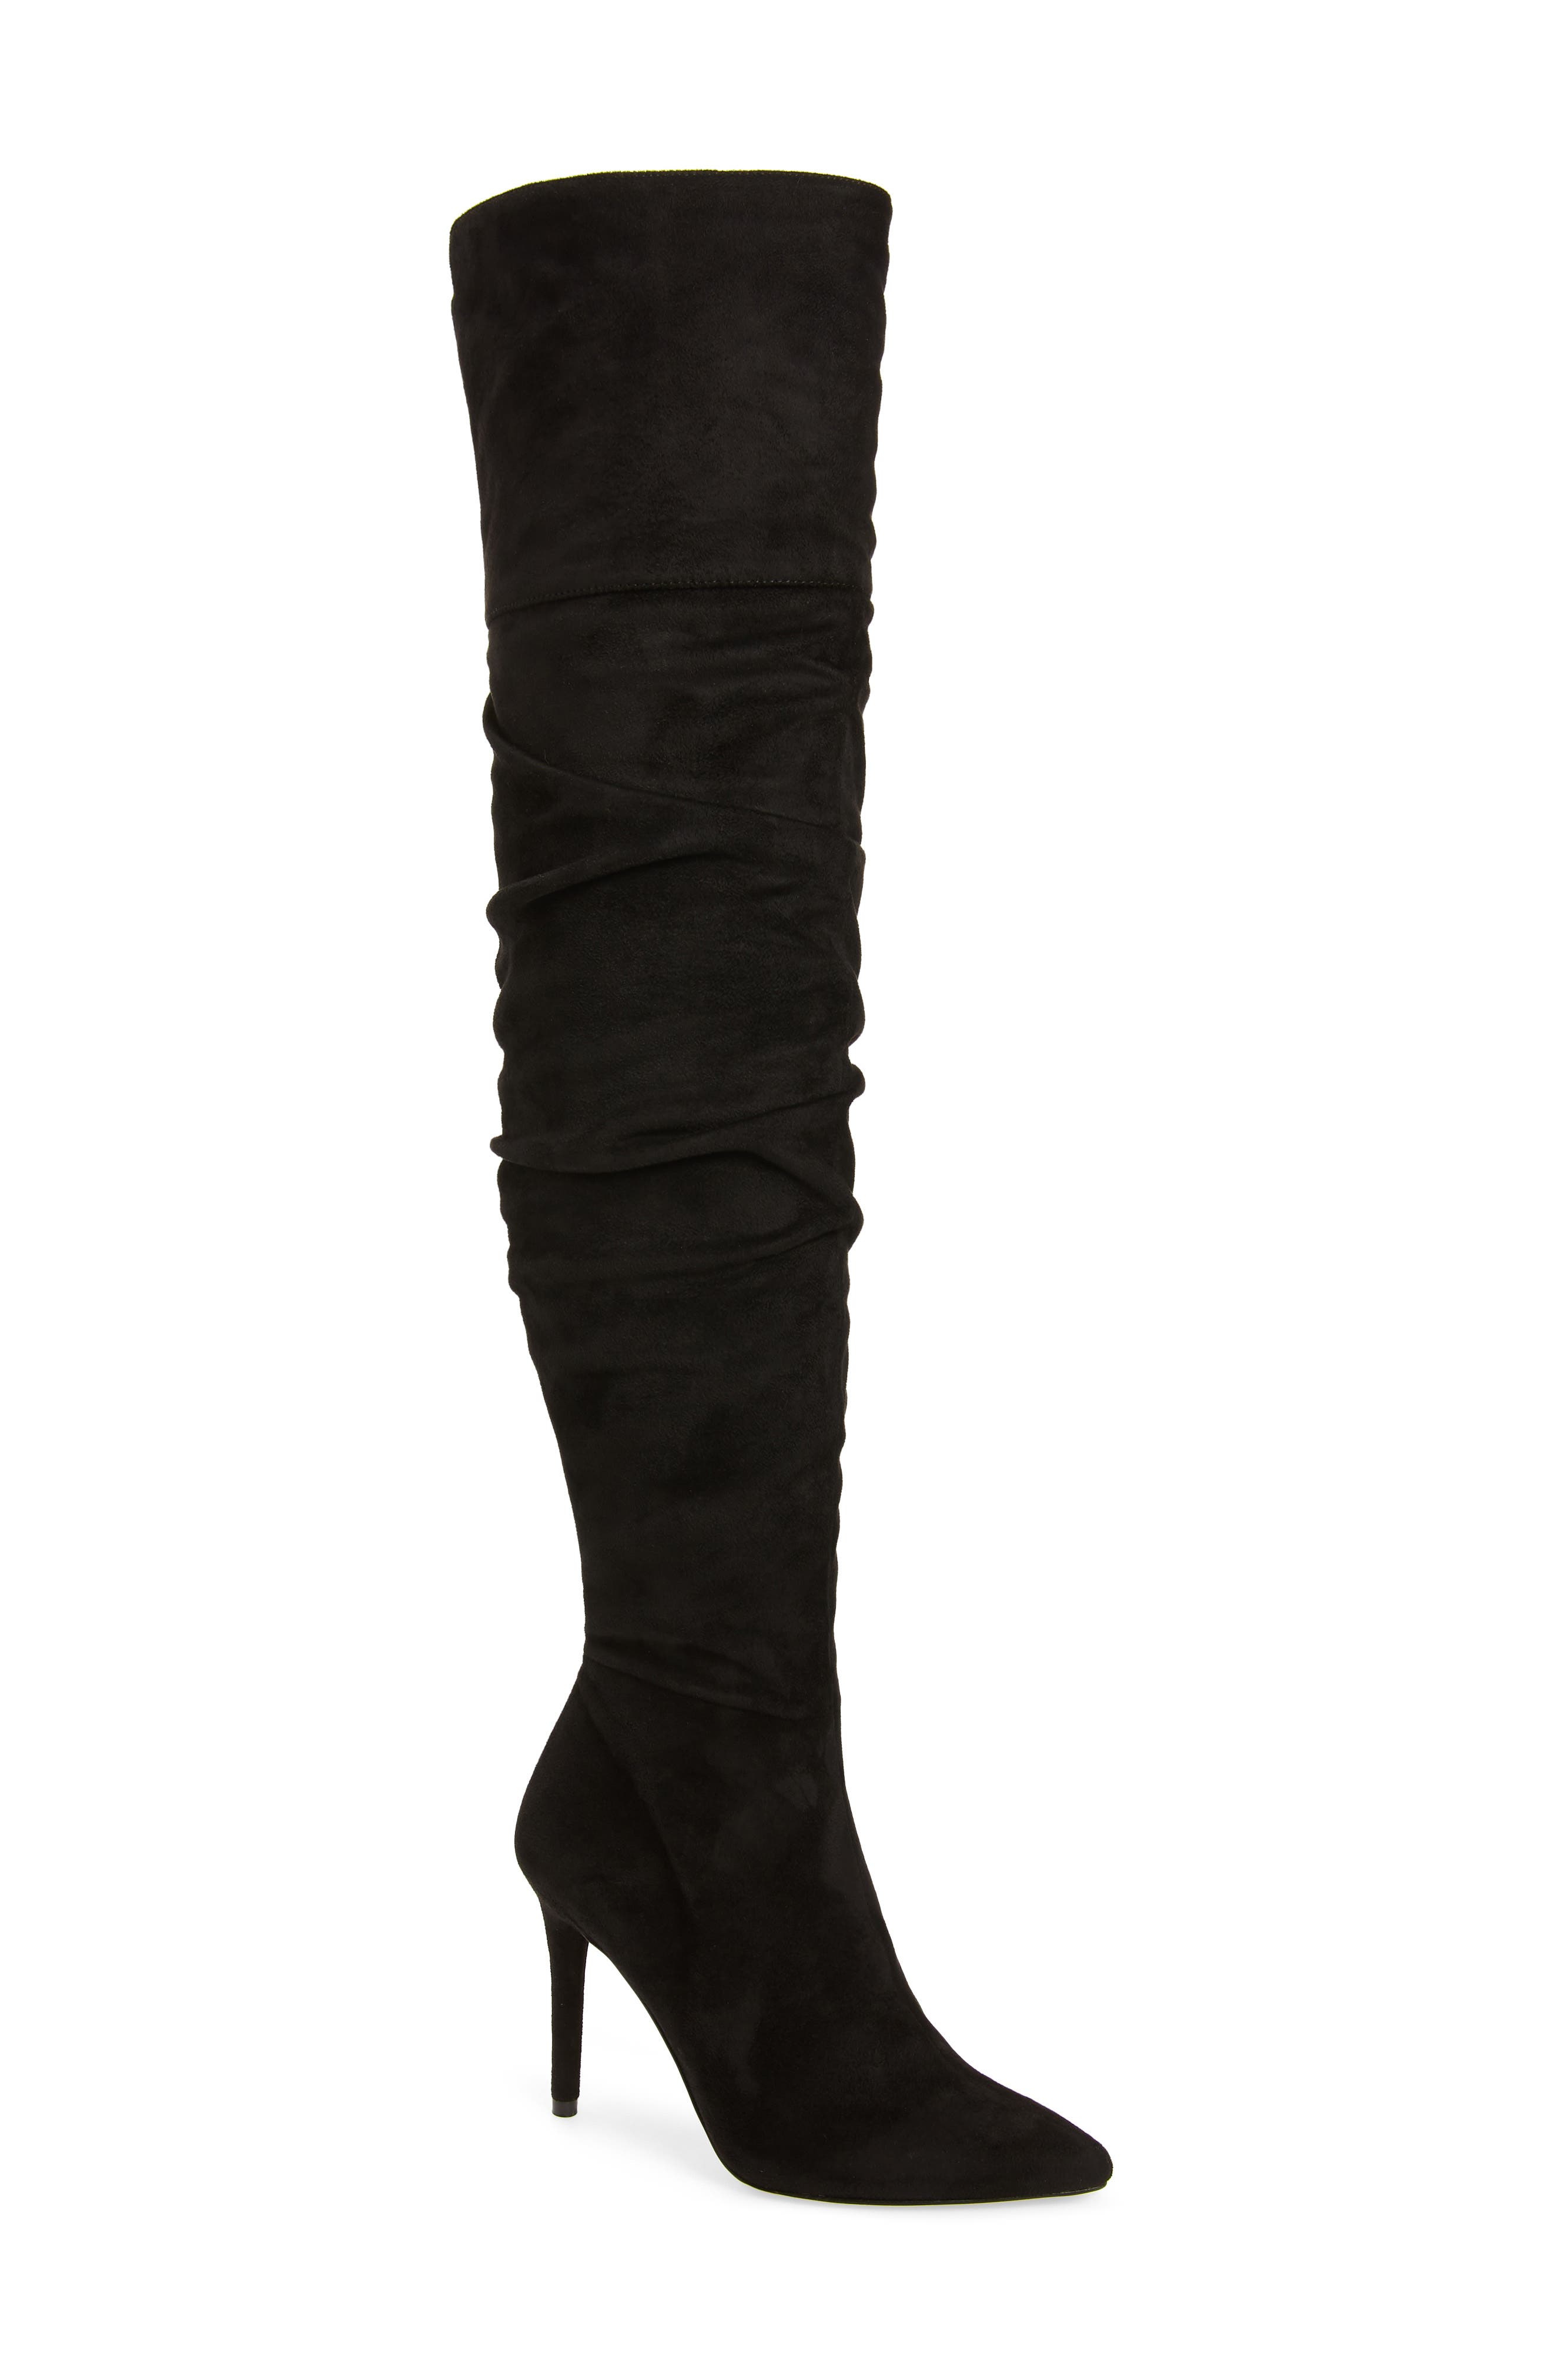 jessica simpson black knee high boots